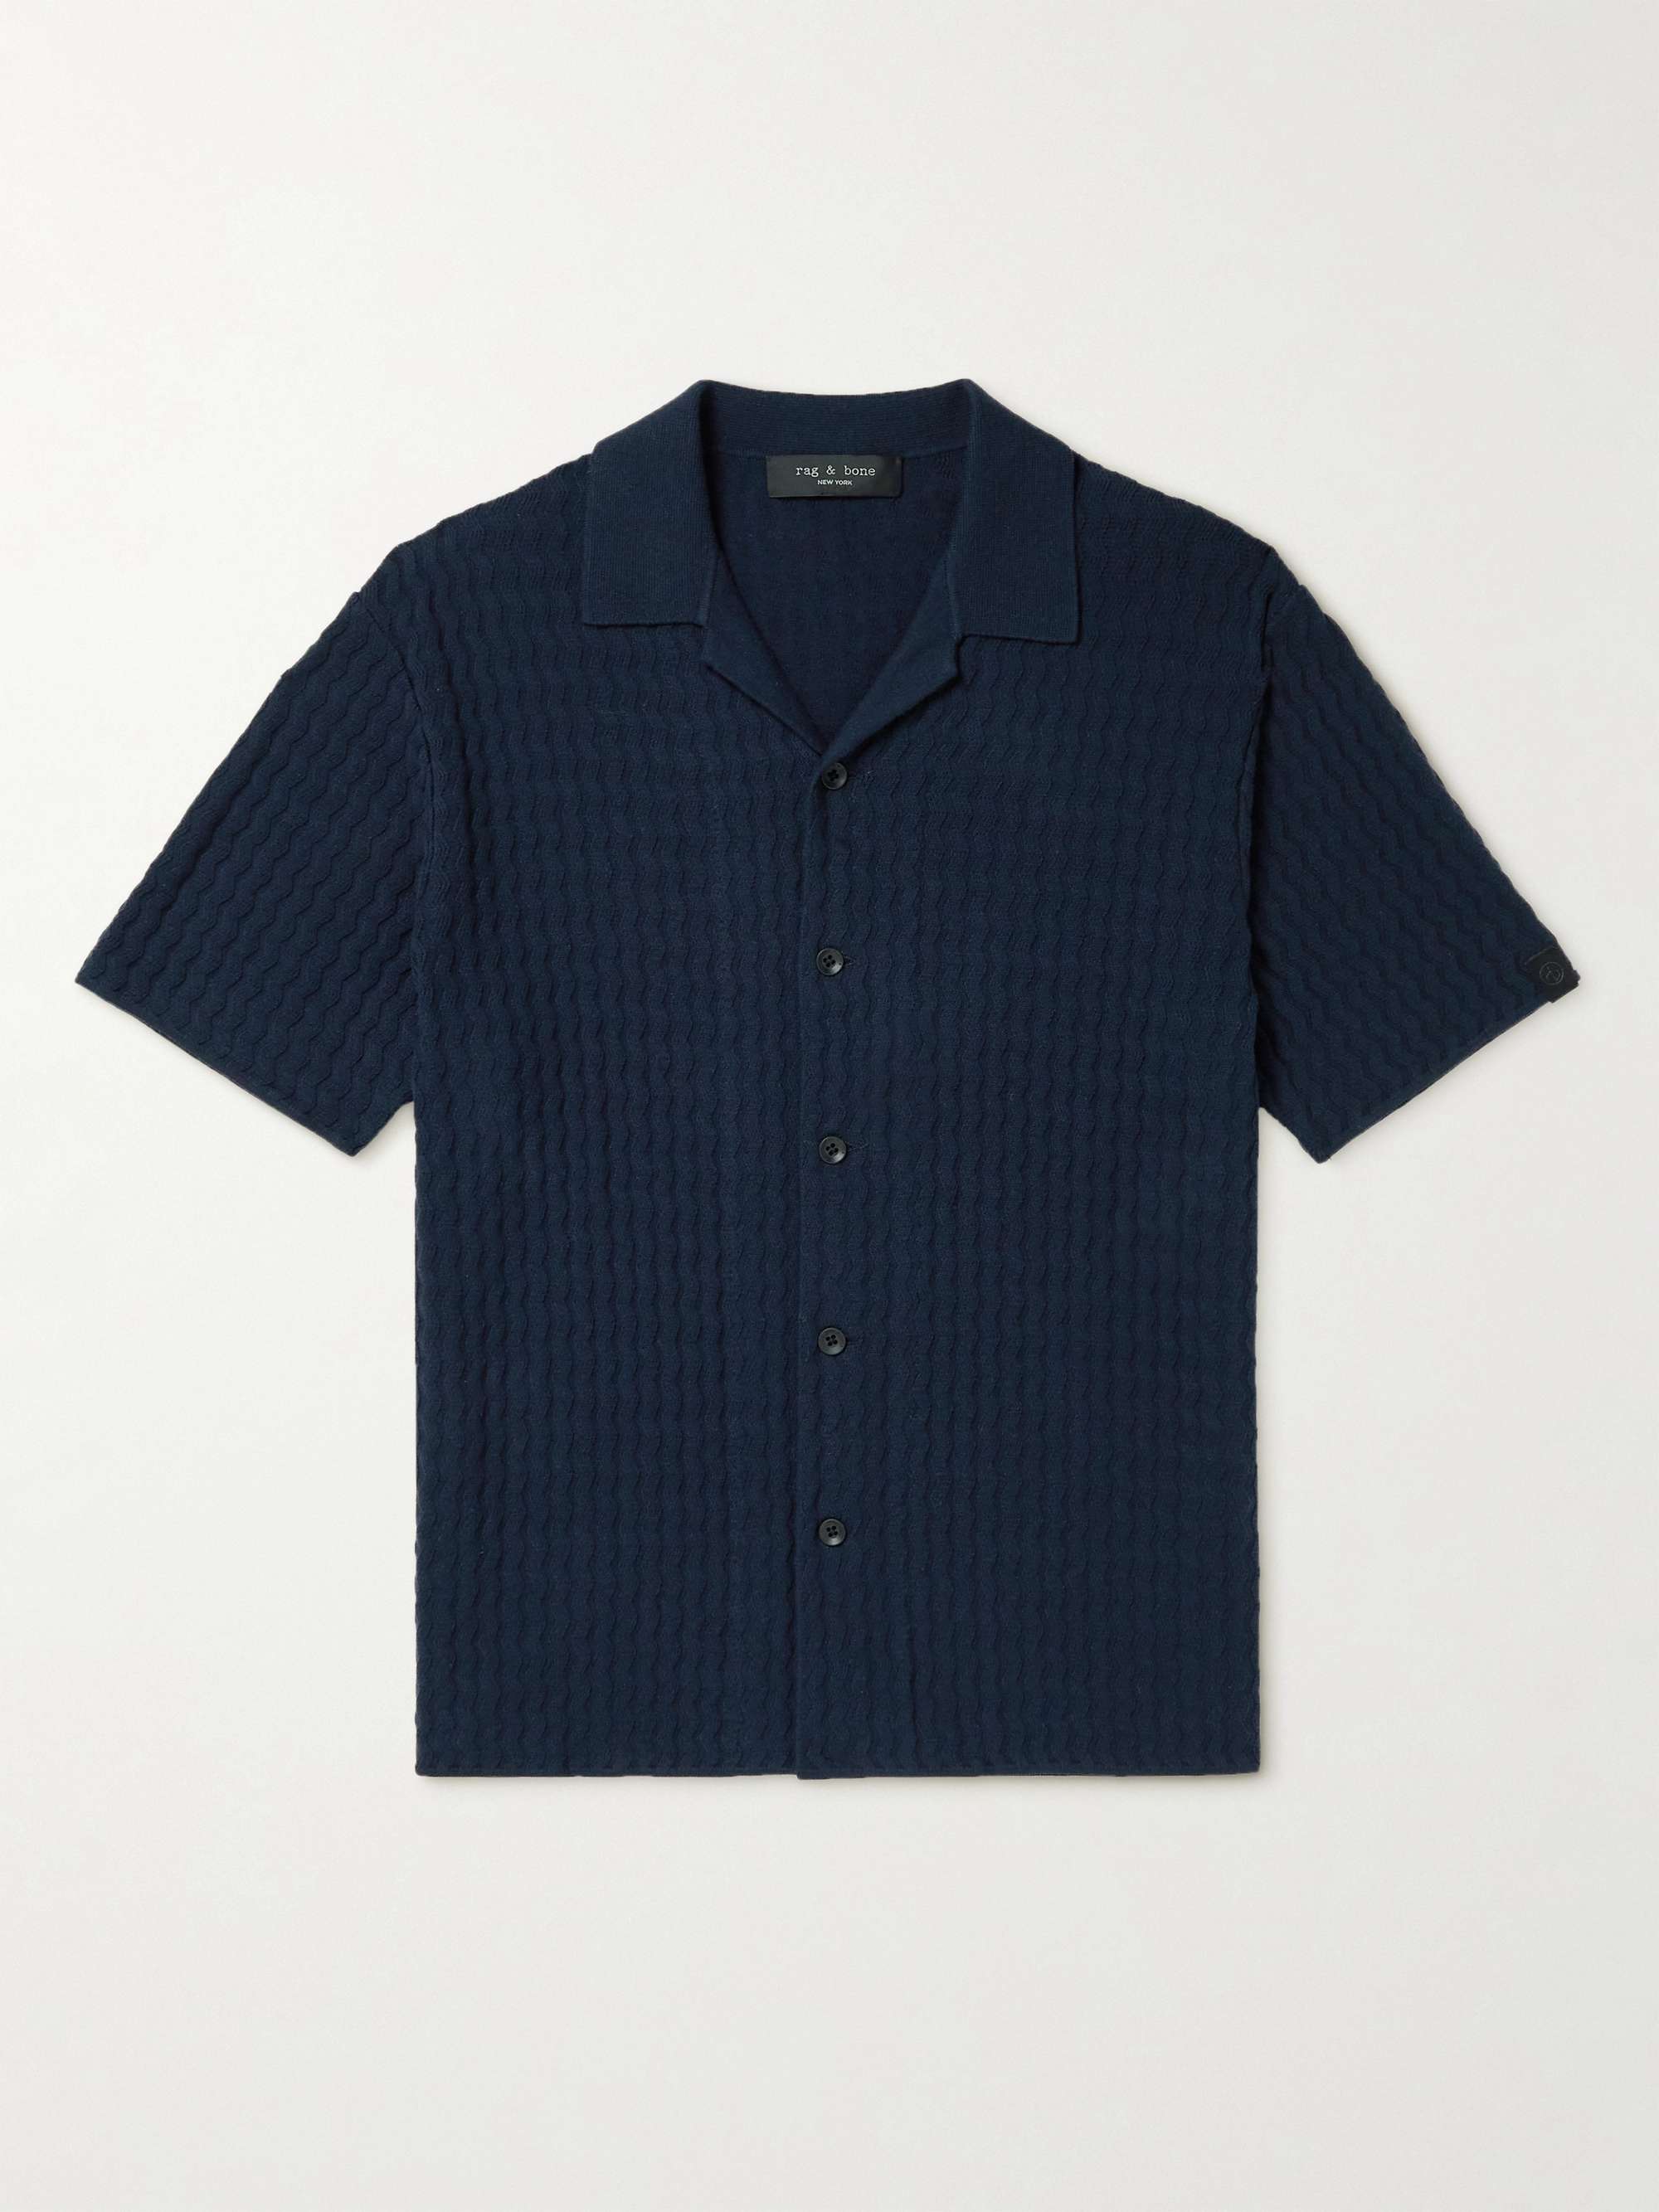 RAG & BONE Avery Camp-Collar Ribbed Cotton Shirt